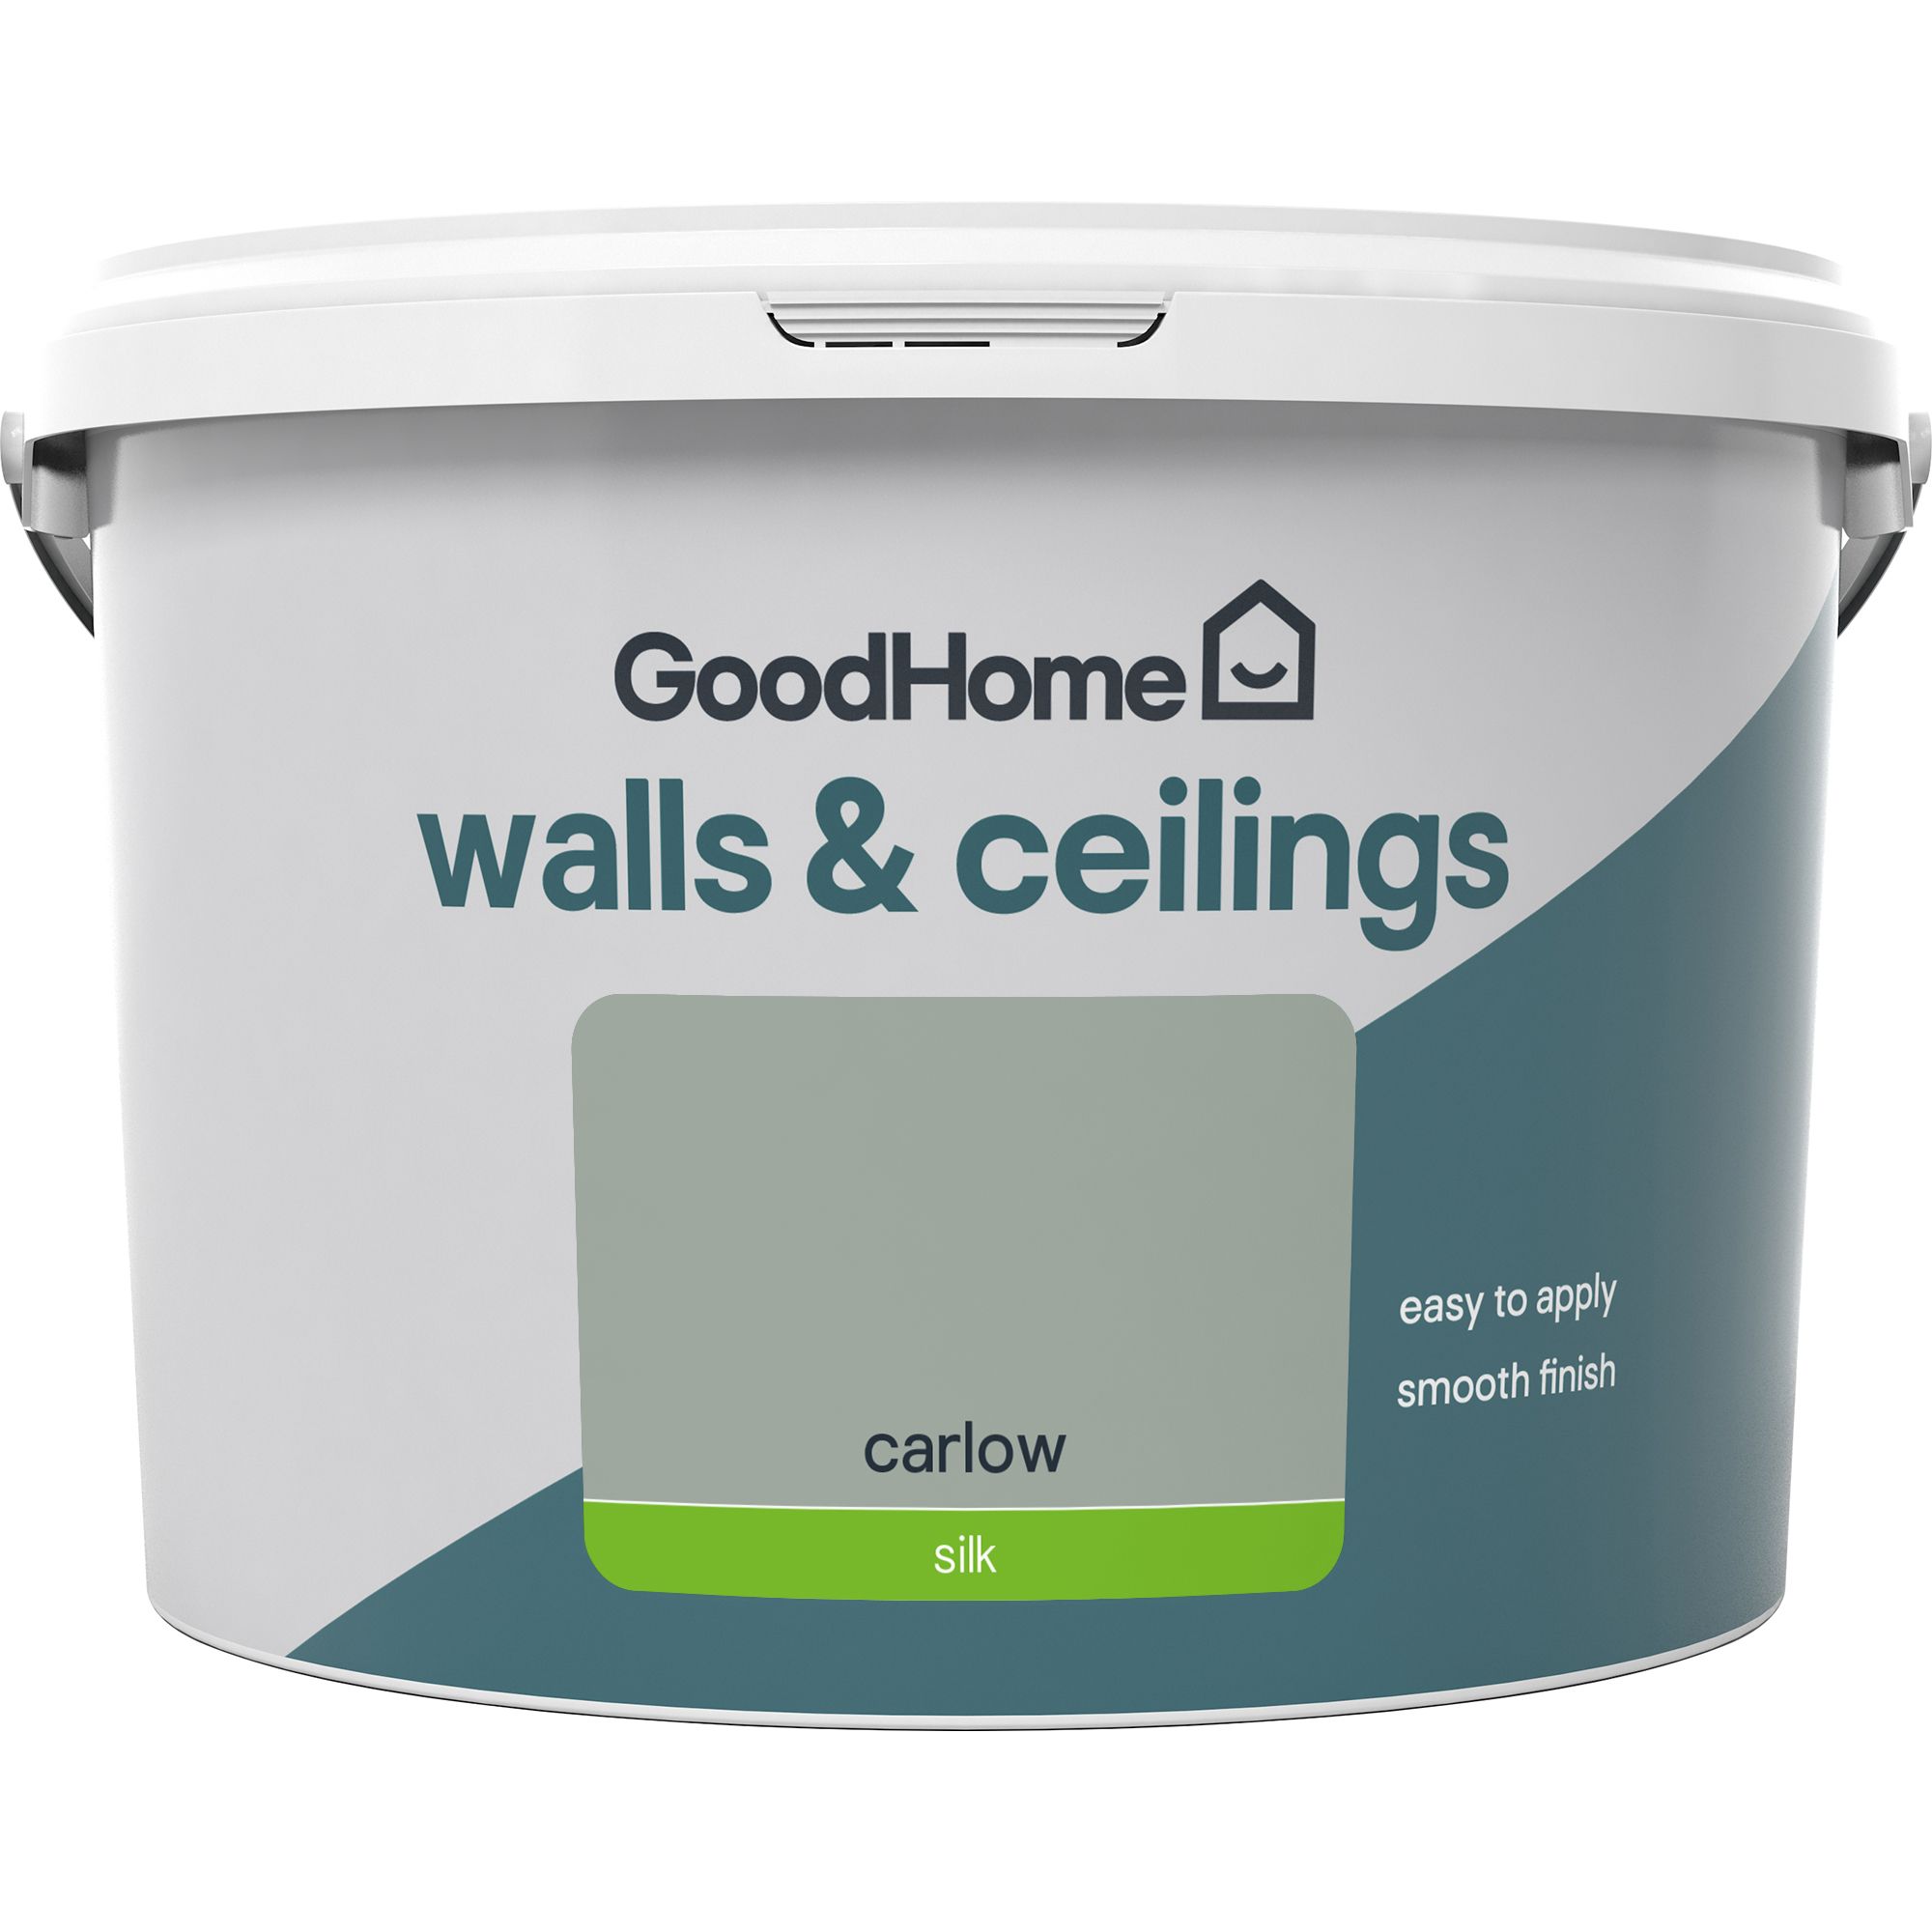 GoodHome Walls & ceilings Carlow Silk Emulsion paint, 2.5L